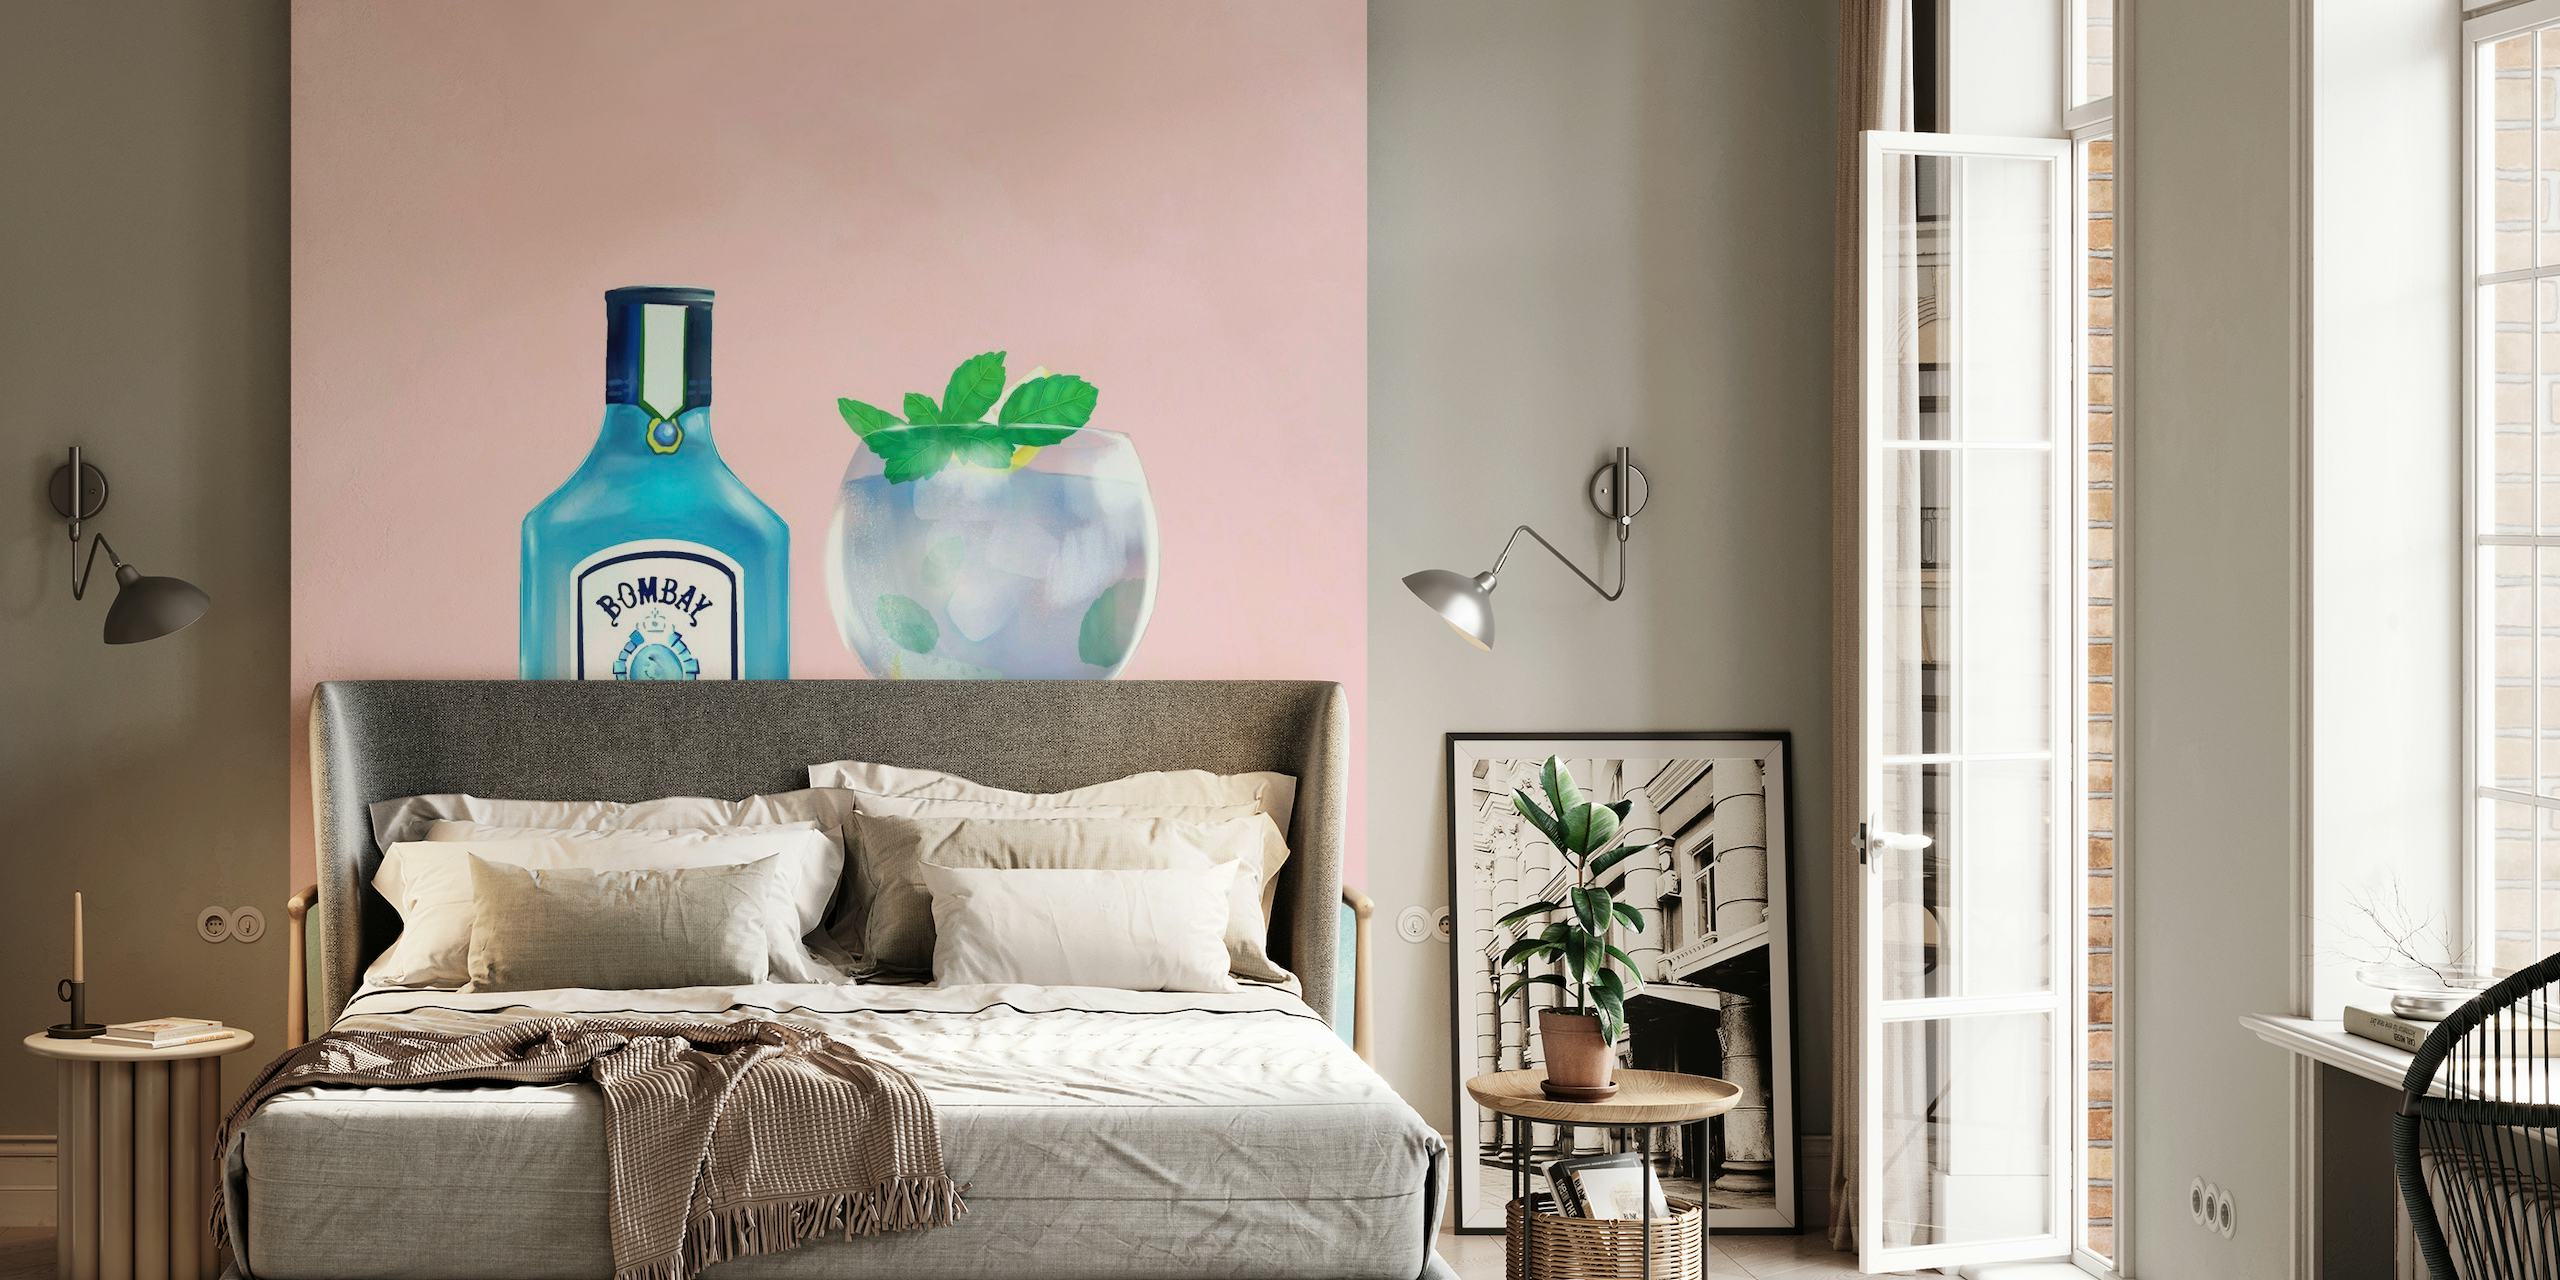 Boca džina i koktel staklena zidna slika s detaljima limuna i mente na nježno ružičastoj pozadini